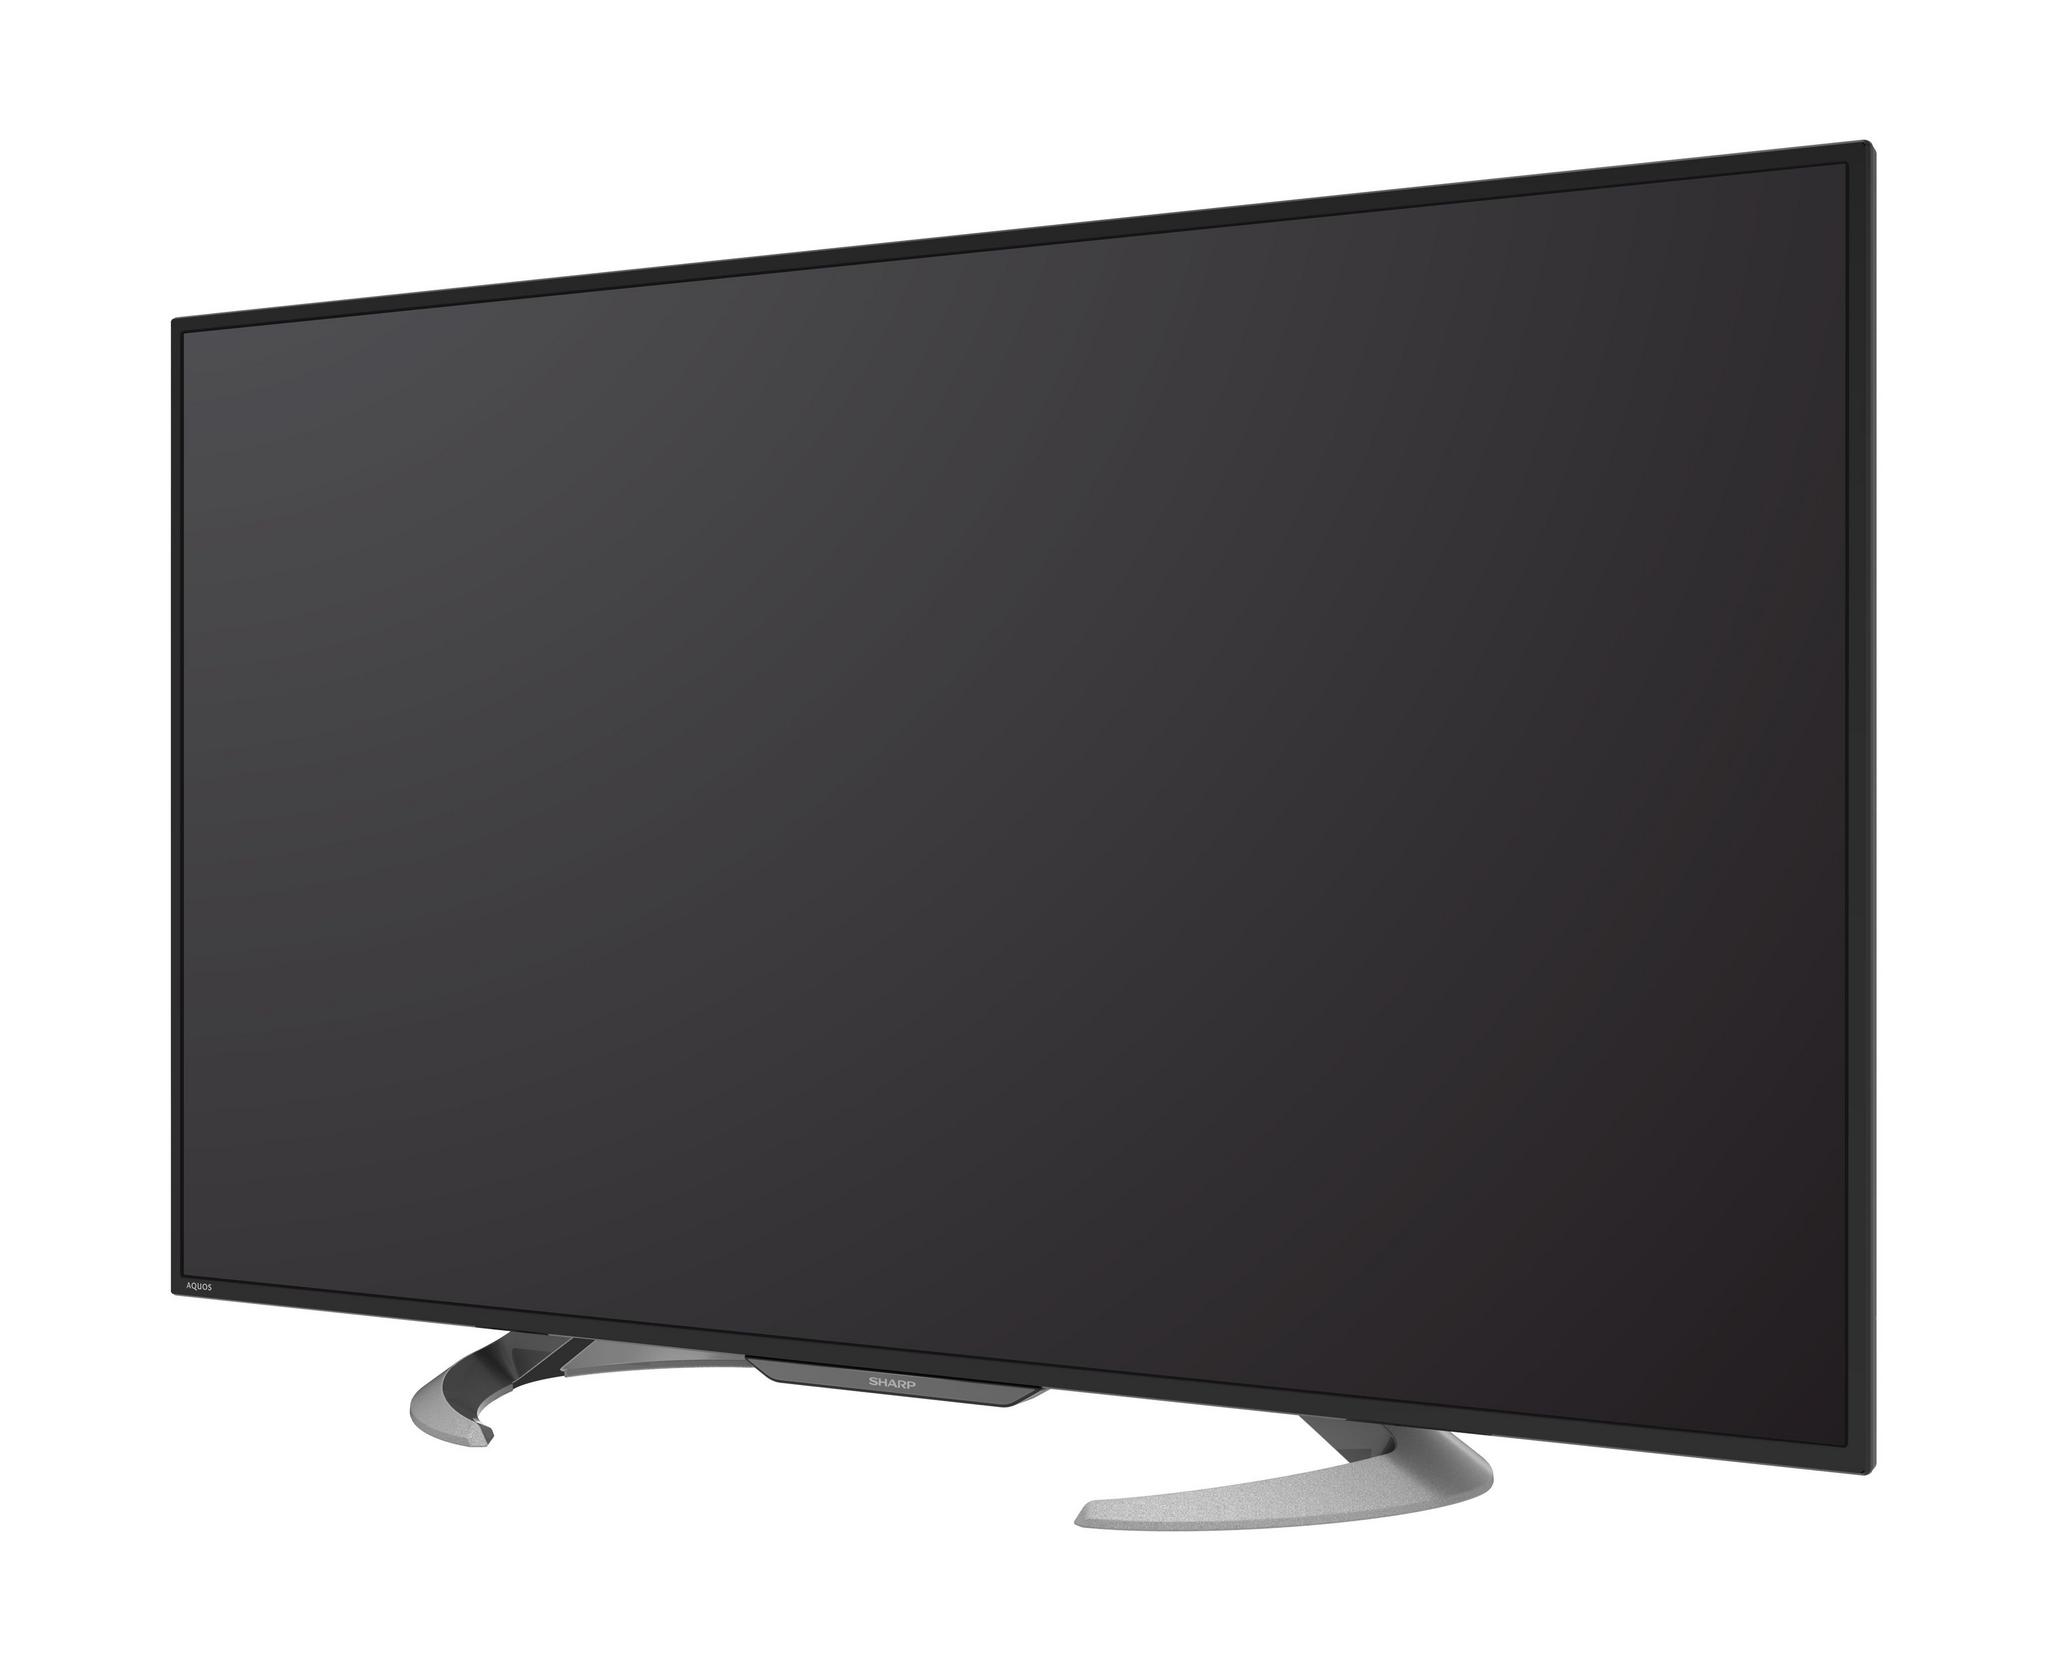 Sharp 50-inch Full HD (1080p) Smart LED TV – LC-50LE570X